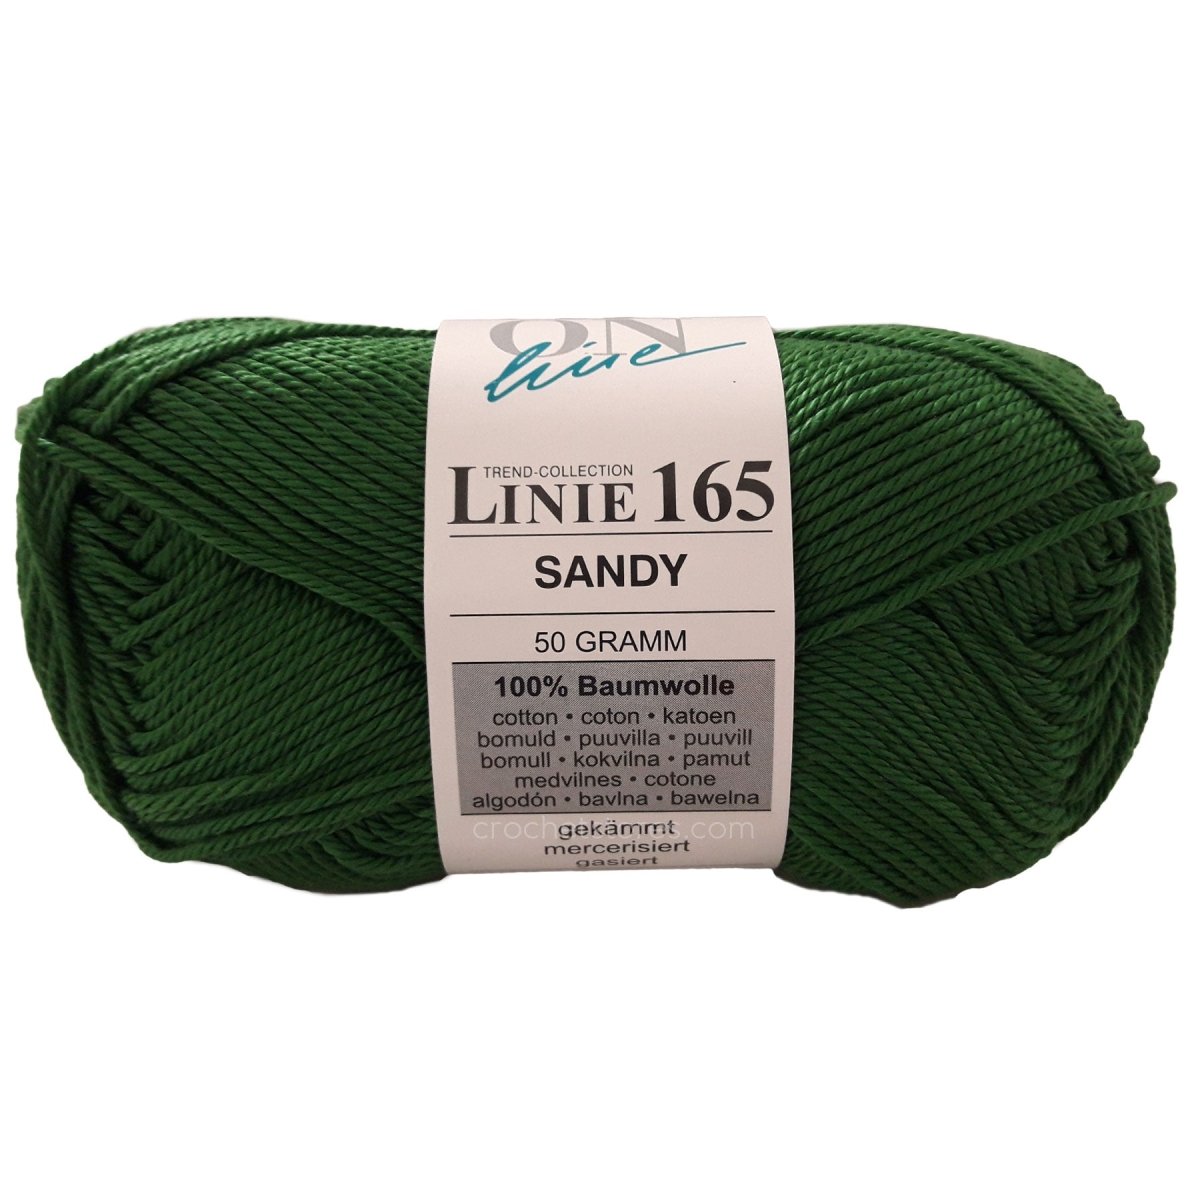 SANDY - Crochetstores110165-020840134366166139